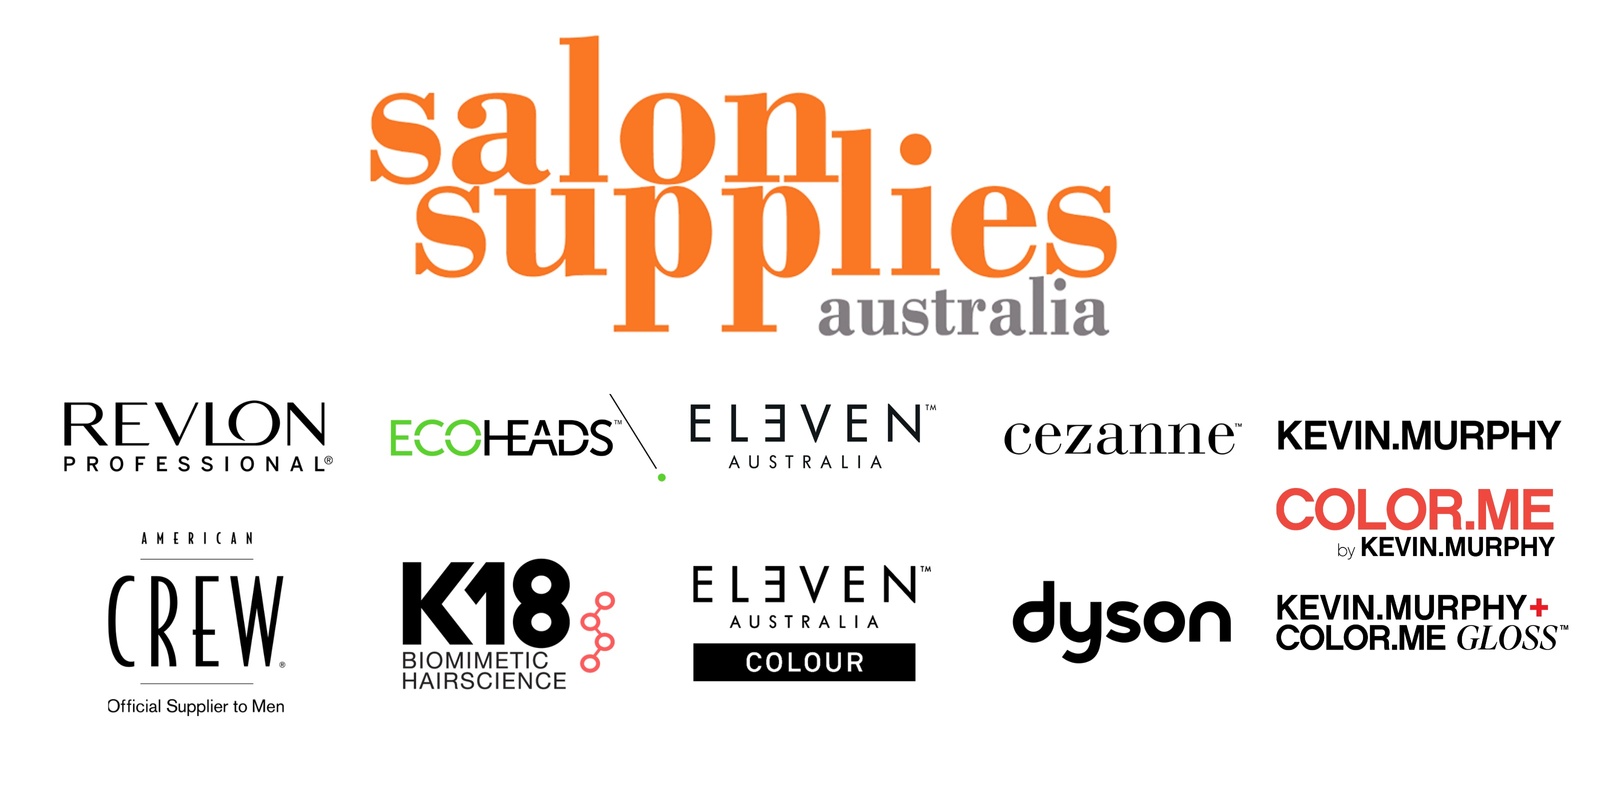 Salon Supplies Australia's banner